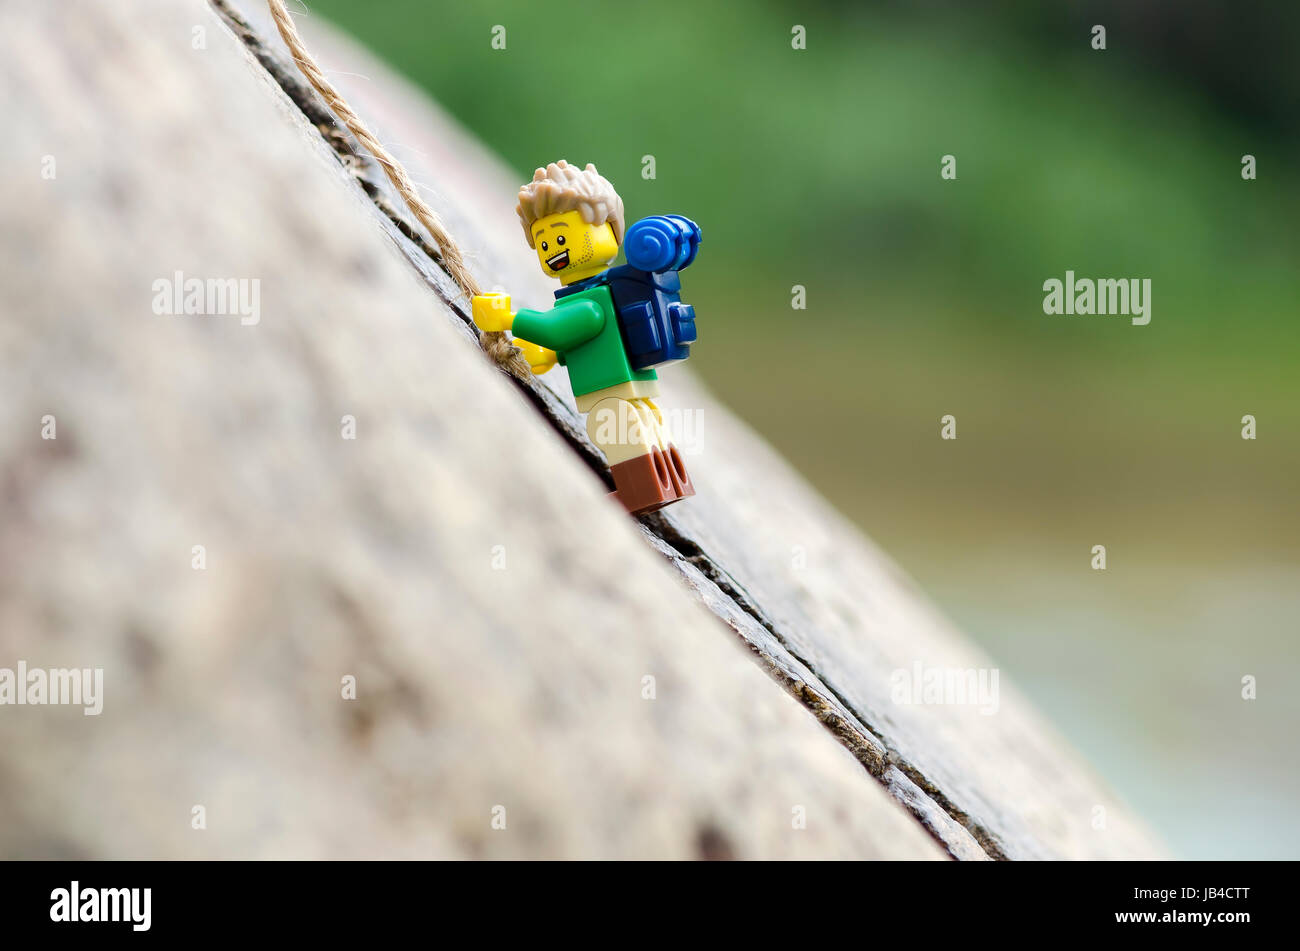 Lego excursionista montaña escalada en miniatura Fotografía de stock - Alamy